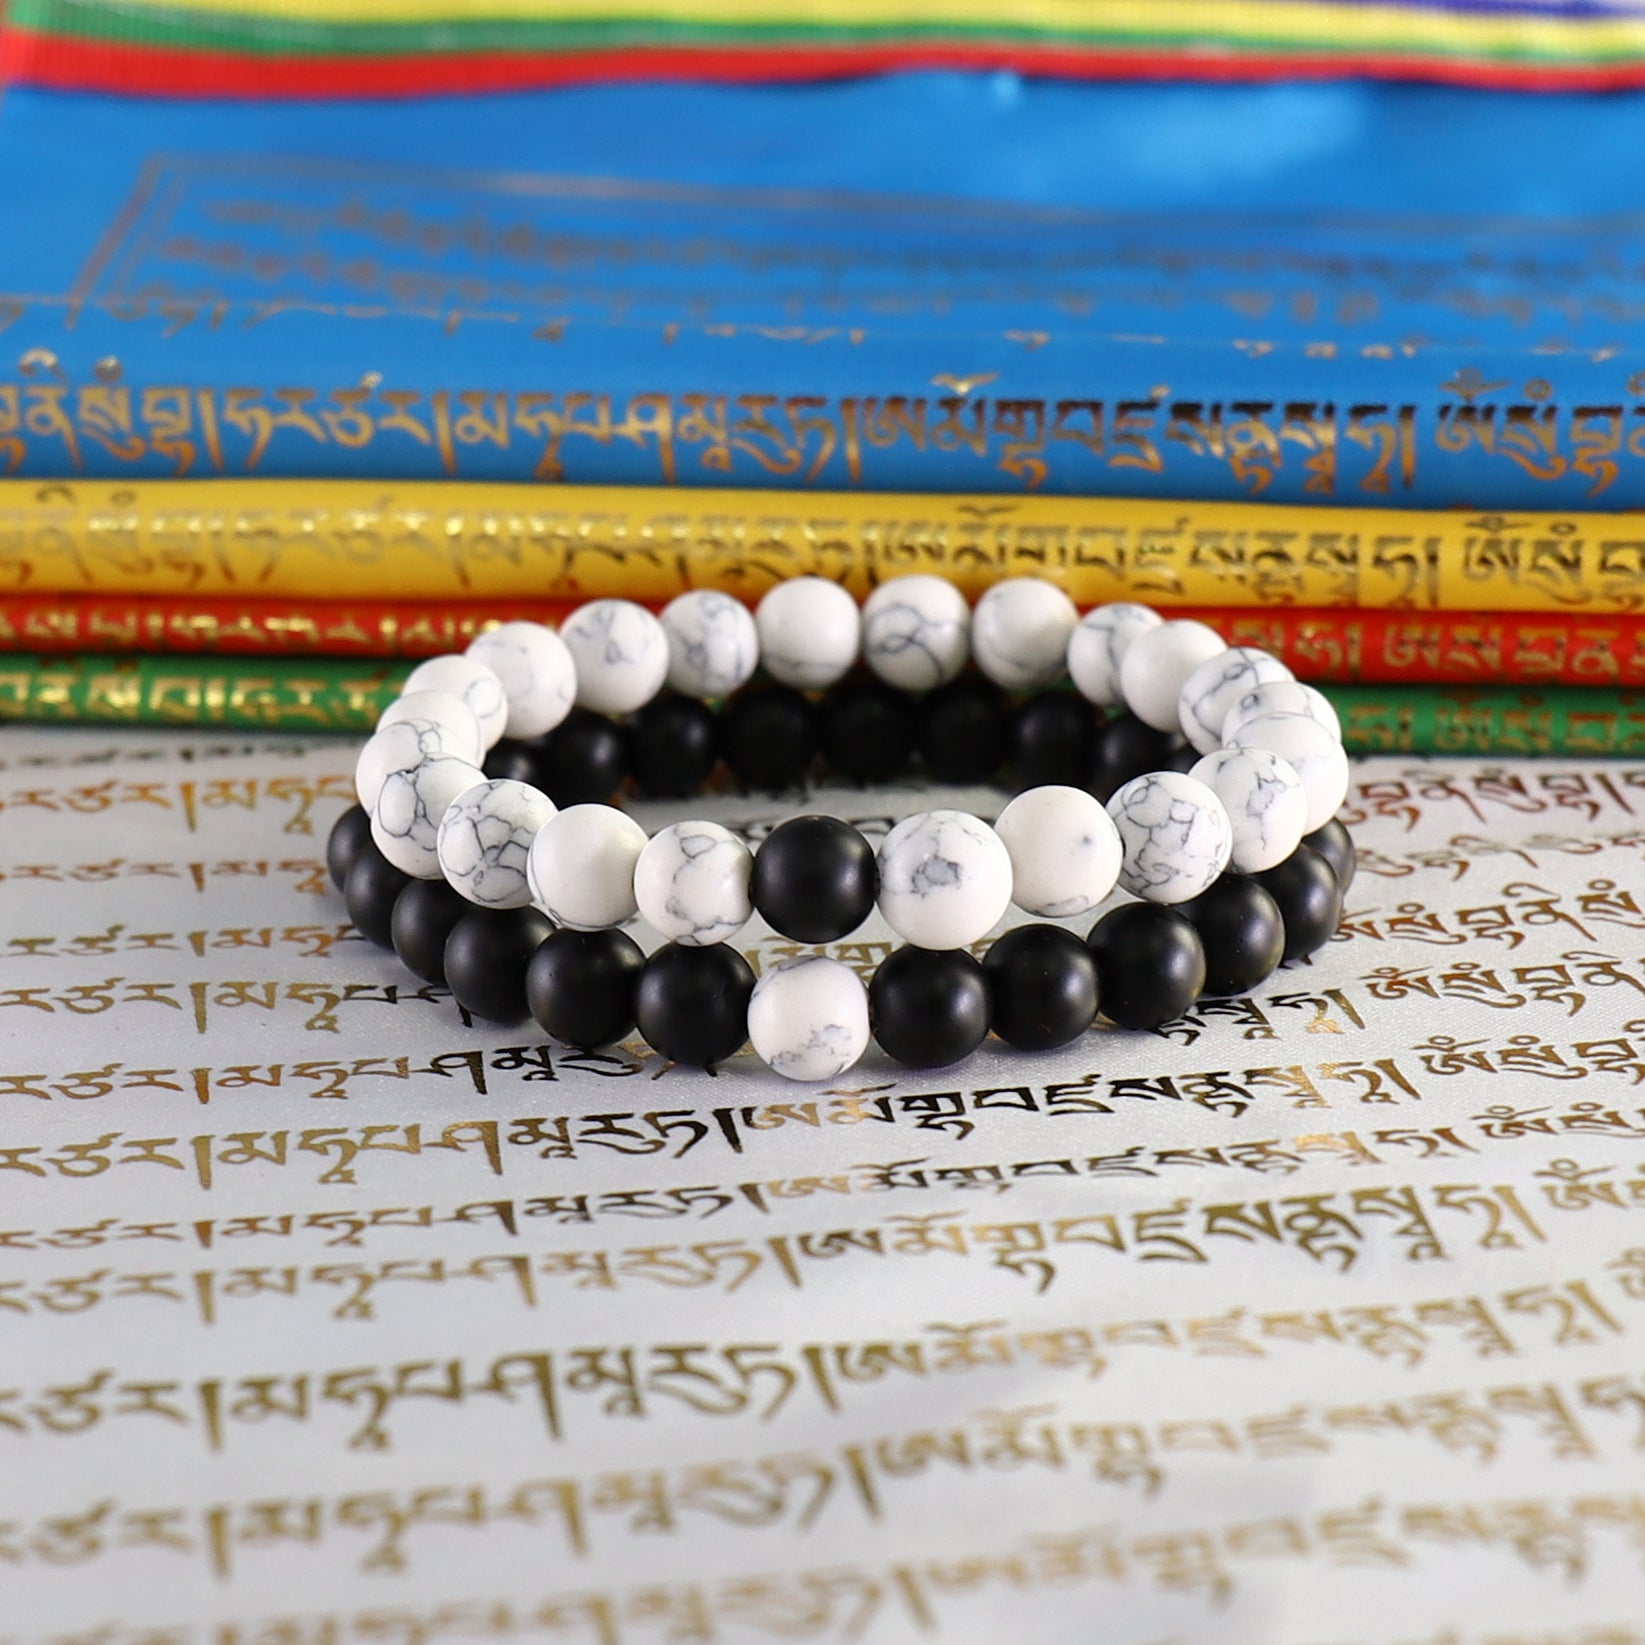 Buddhist Handcrafted Nature Sandalwood Bracelet for "Yin & Yang Balance" (Includes Both Bracelets)